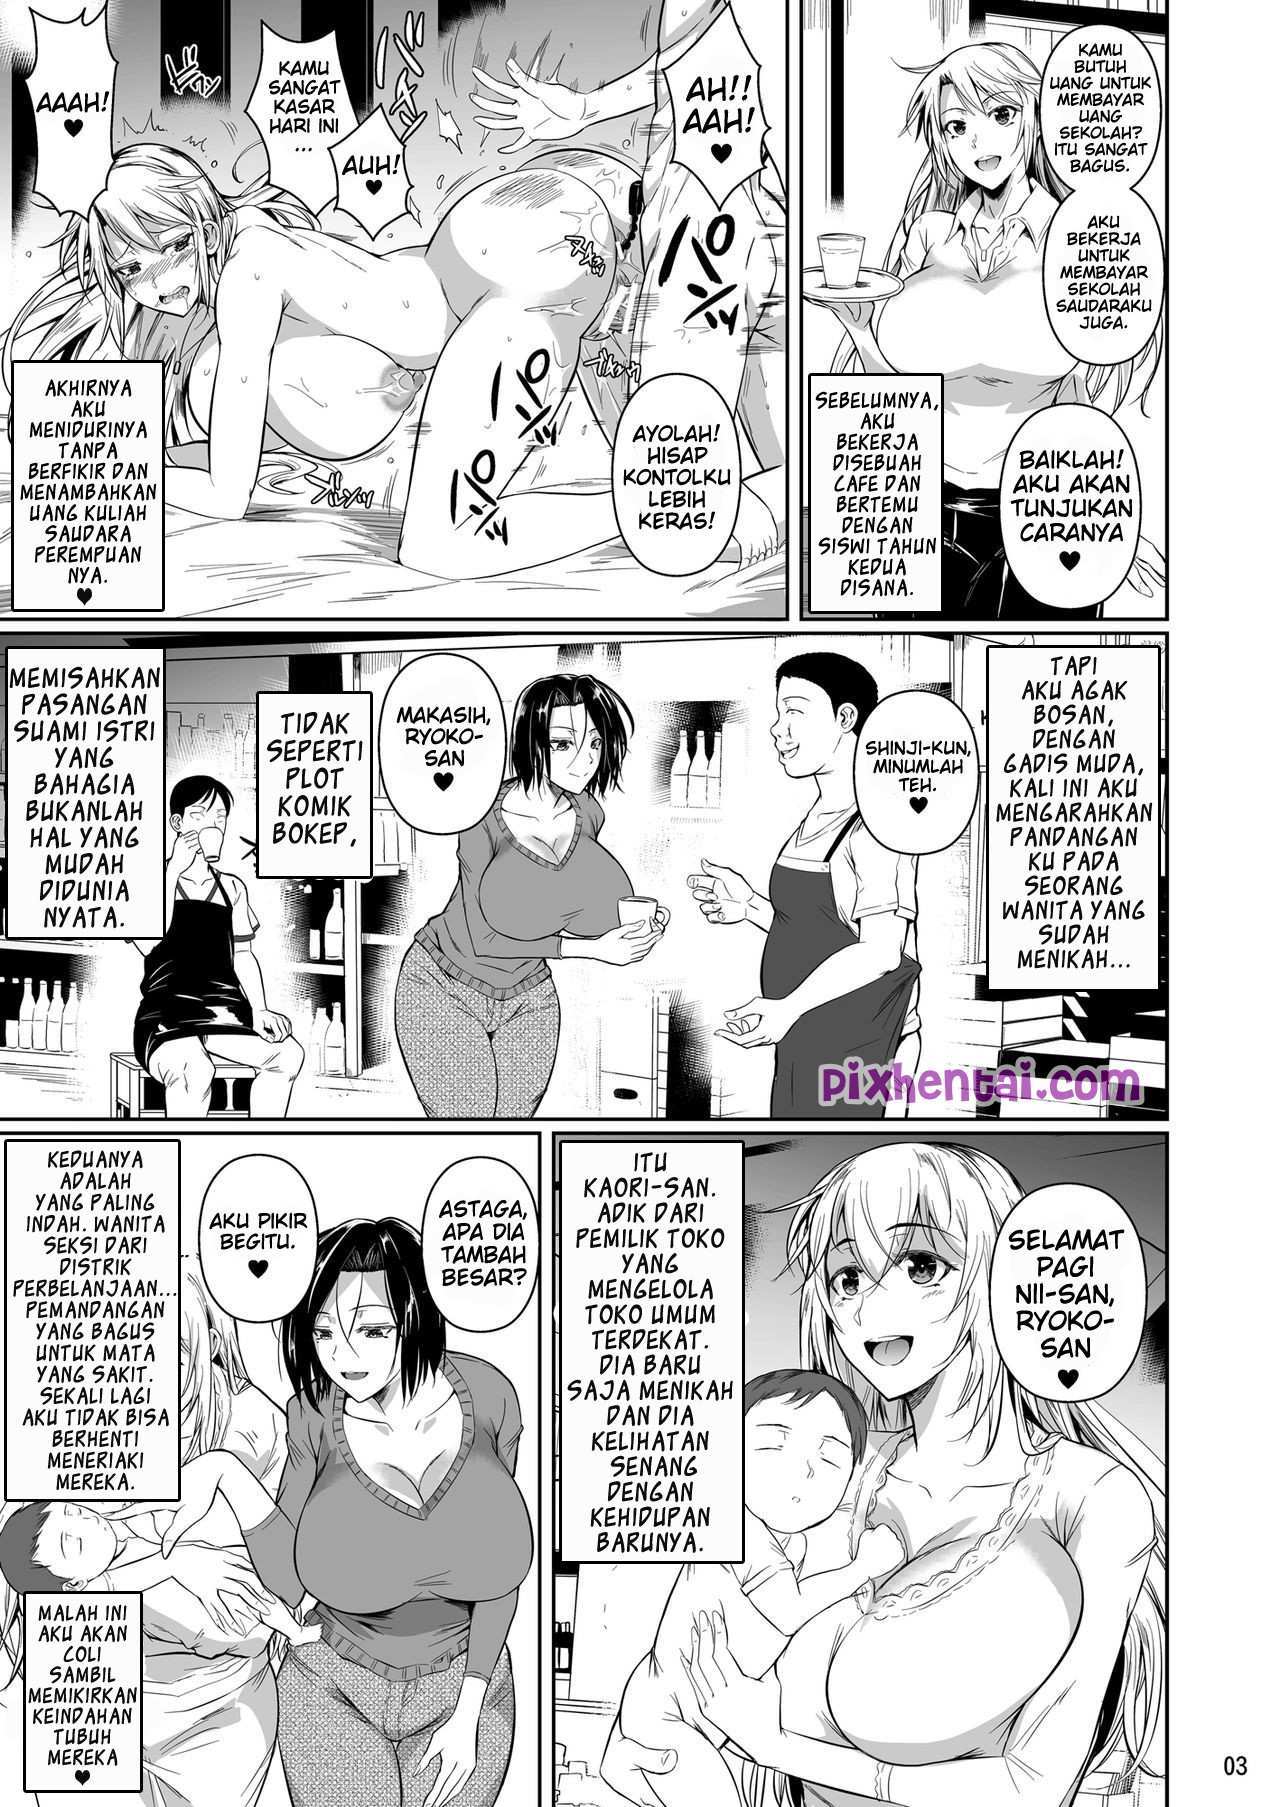 Komik hentai xxx manga sex bokep hamili istri bos yang bohay 03